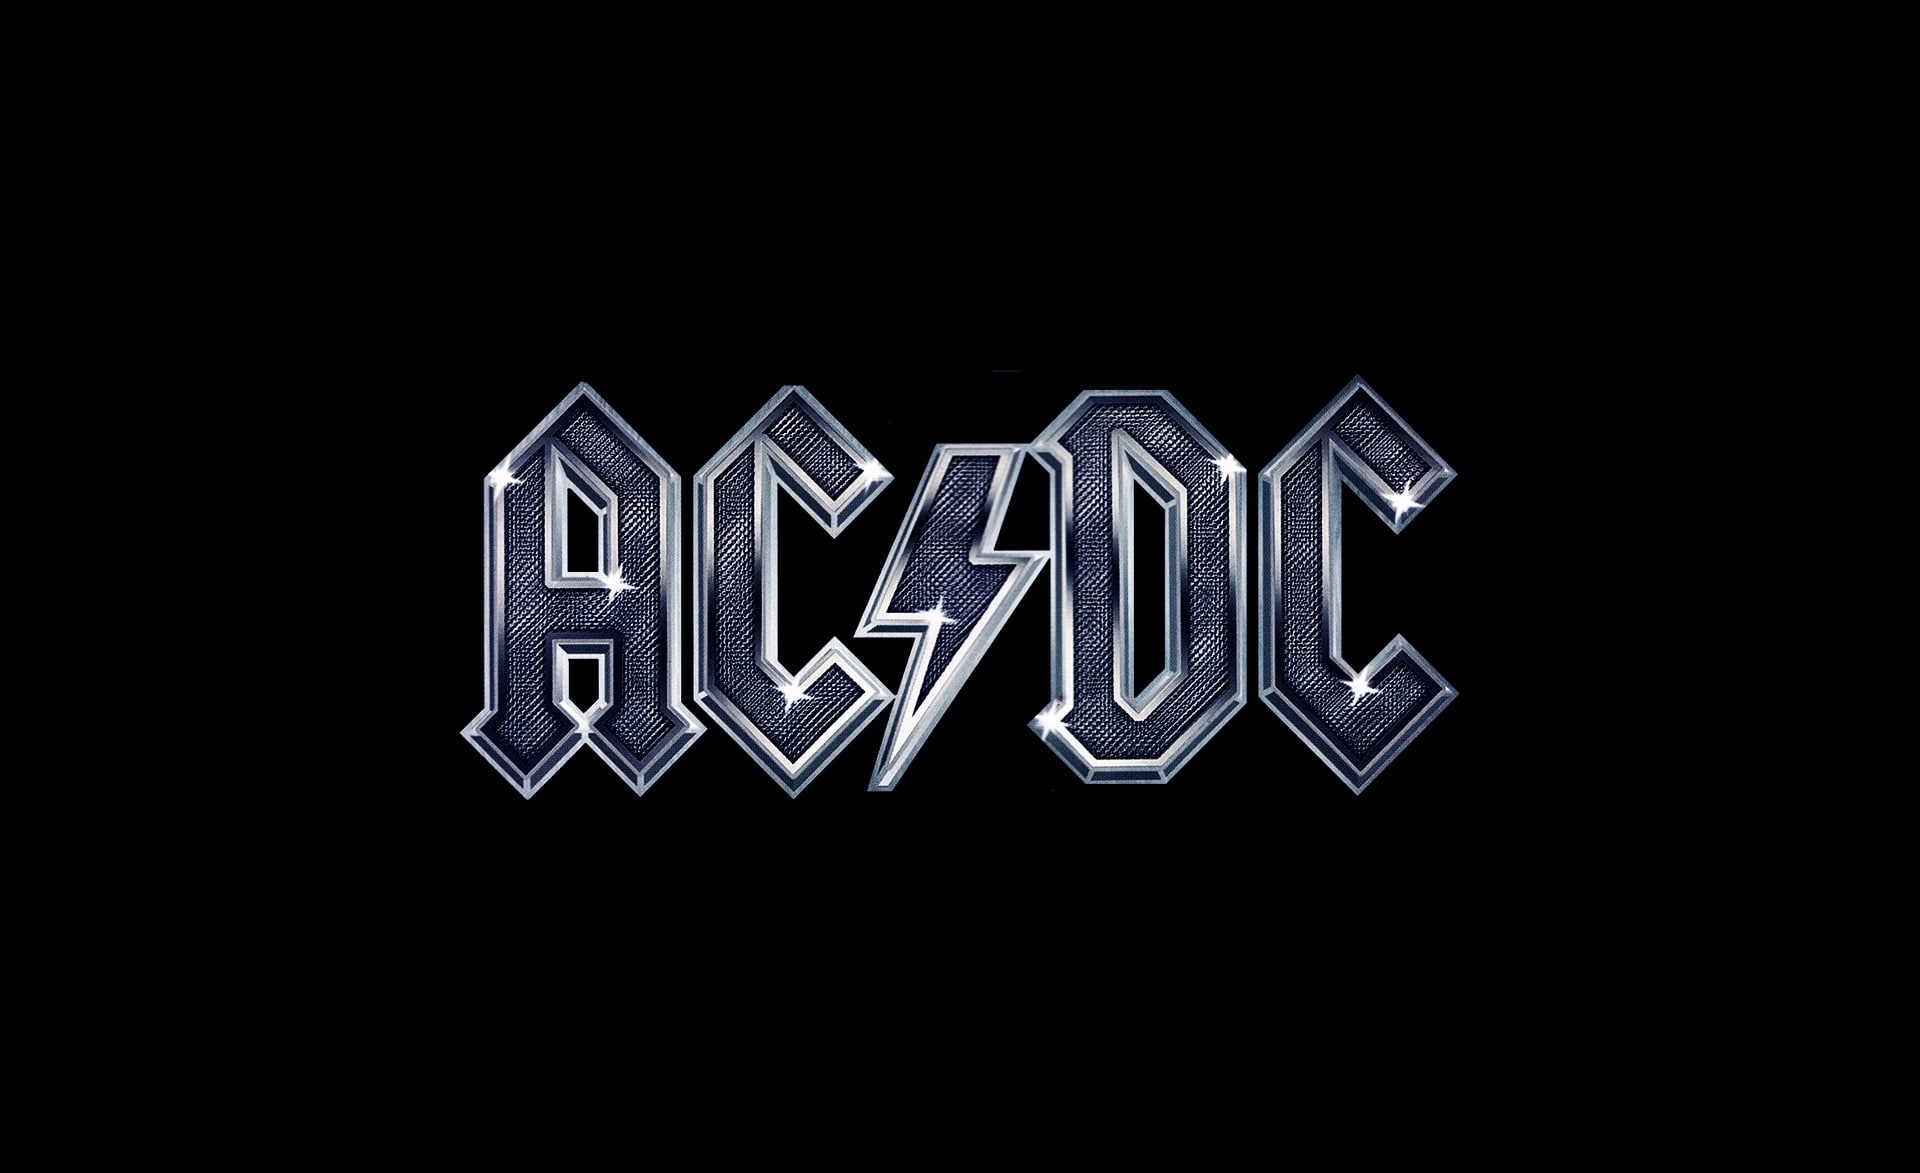 AC/DC High Voltage, AC DC logo, Music, Rock, acdc, rock band